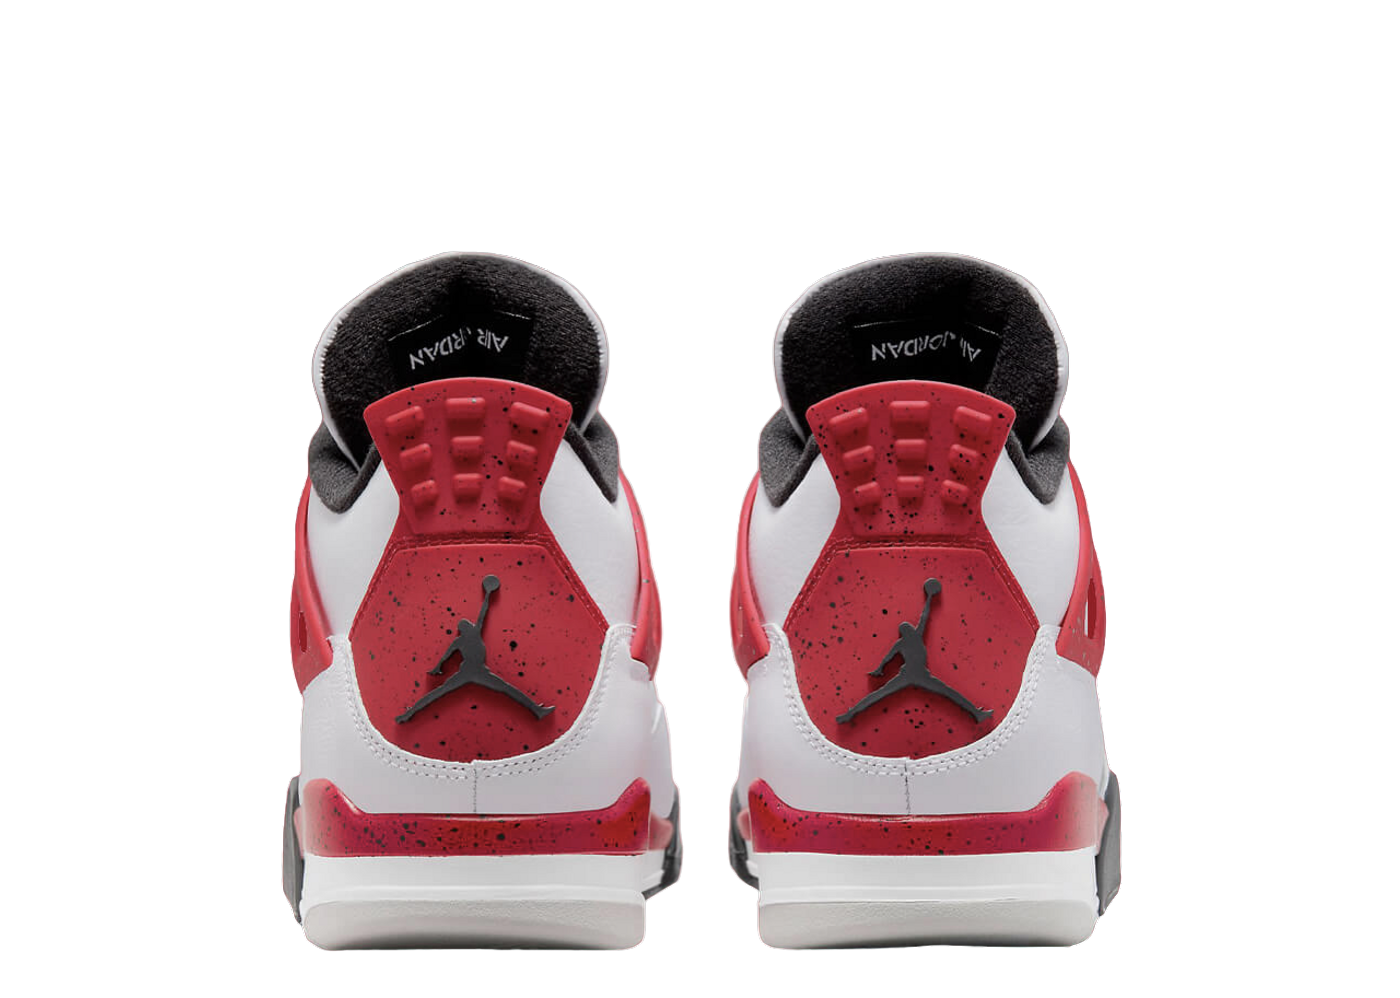 Jordan 4 Retro “Red Cement” – Limited Kick's